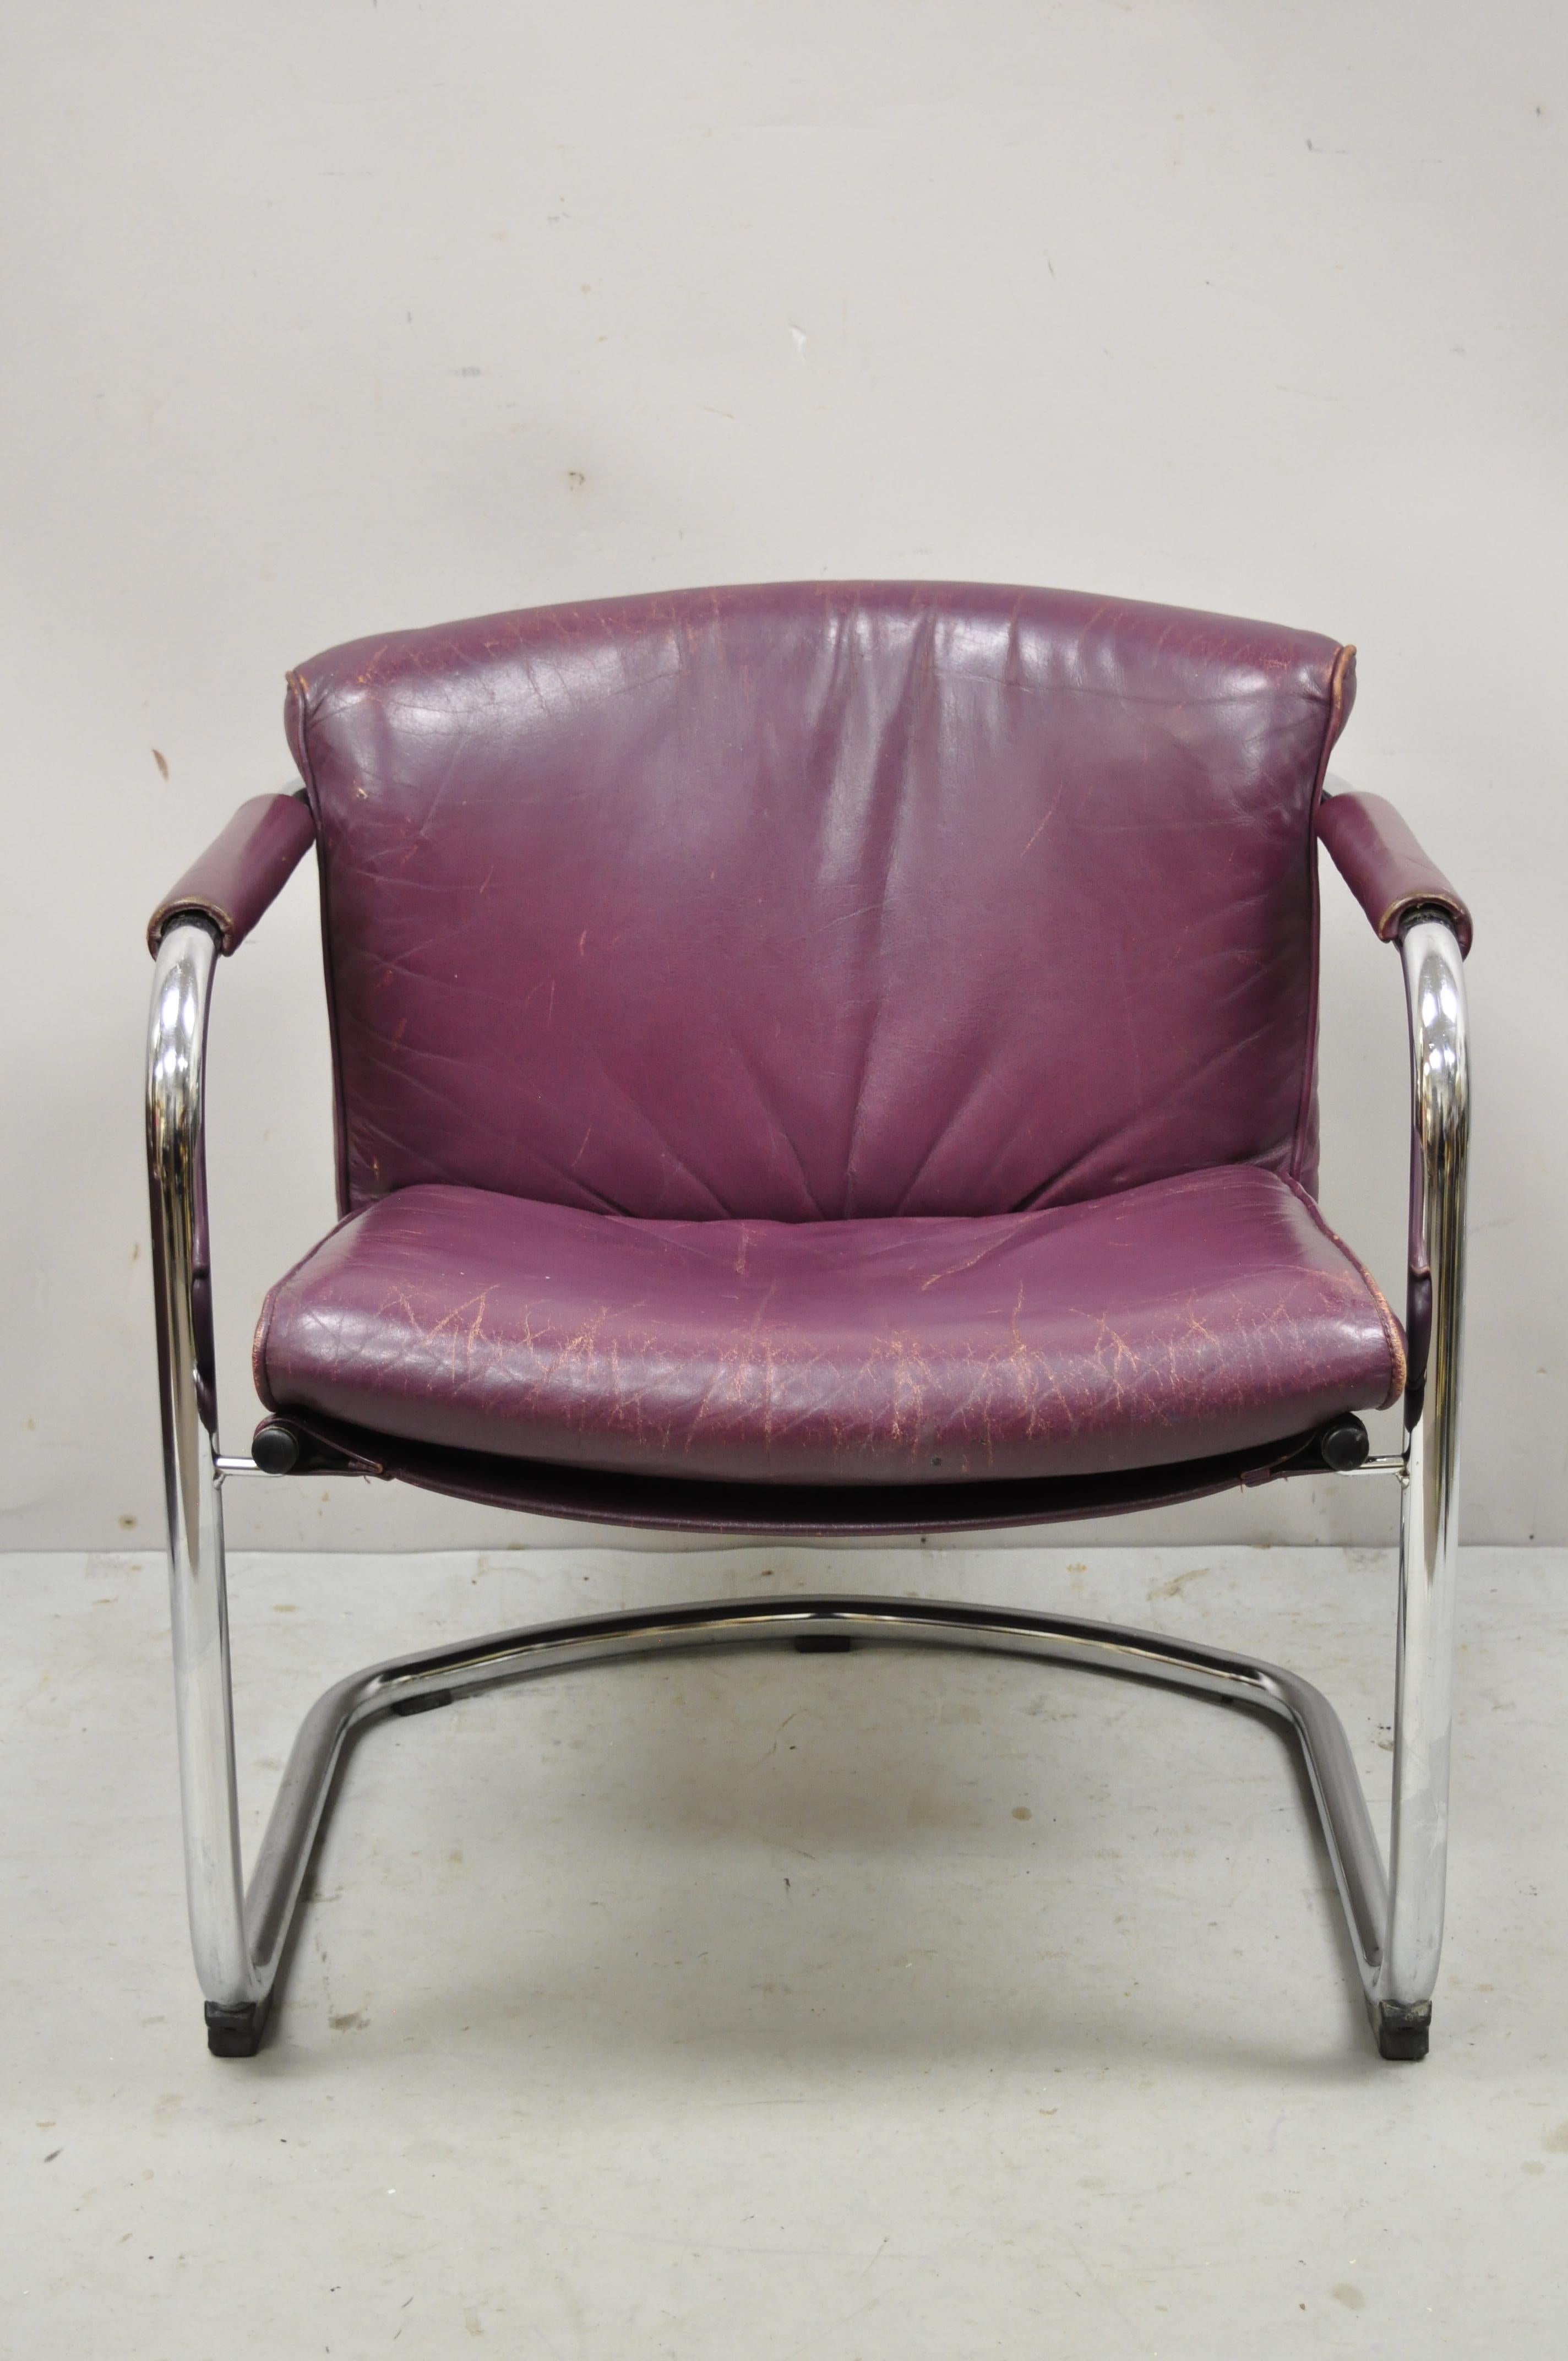 Vintage IRE Furniture Skillingaryd Schwedisch Modern Lila Leder Sling Lounge Stuhl. Merkmale: verchromtes Stahlrohrgestell, violettes Lederkissen und -sling, lederumwickelte Armlehnen, Original Label, klare modernistische Linien, großartiger Stil